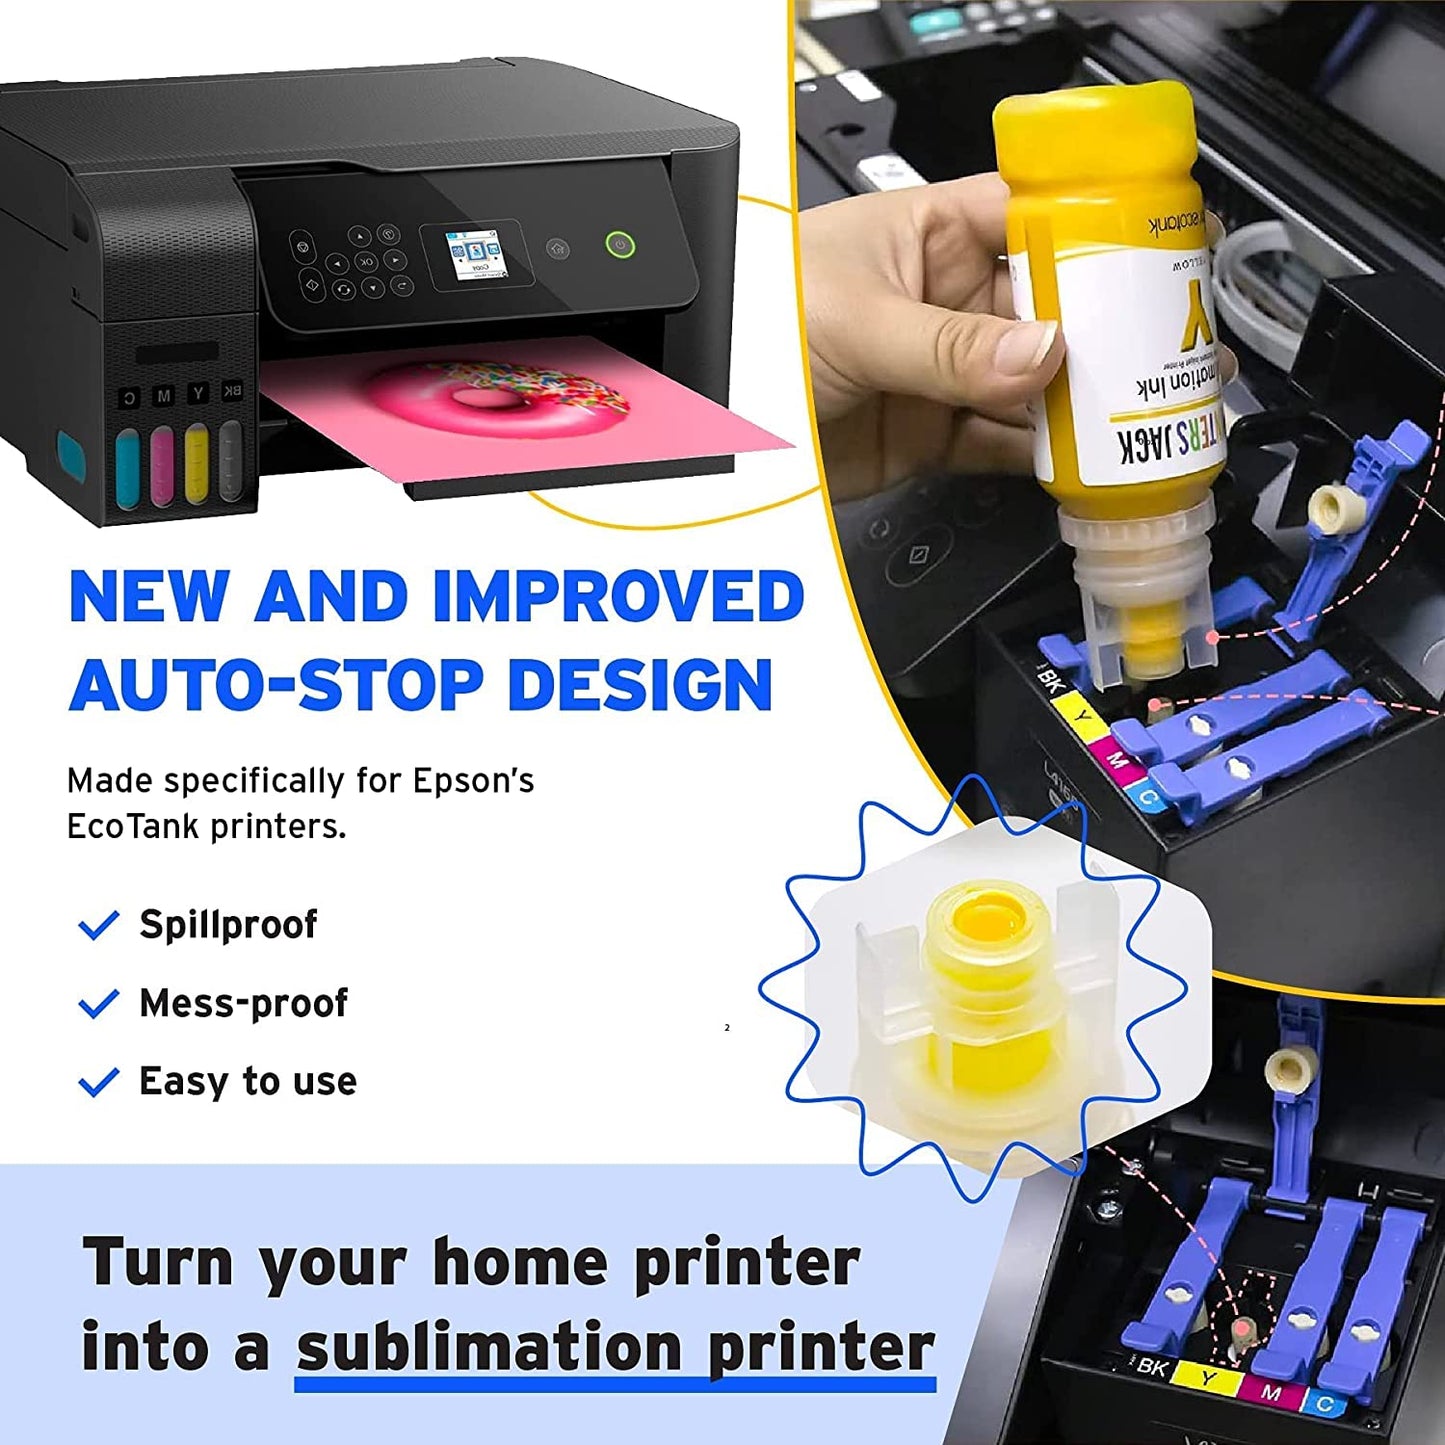 Black Auto-Refill Anti-UV Printers Jack Sublimation Ink Refill for Epson EcoTank Supertank Printers